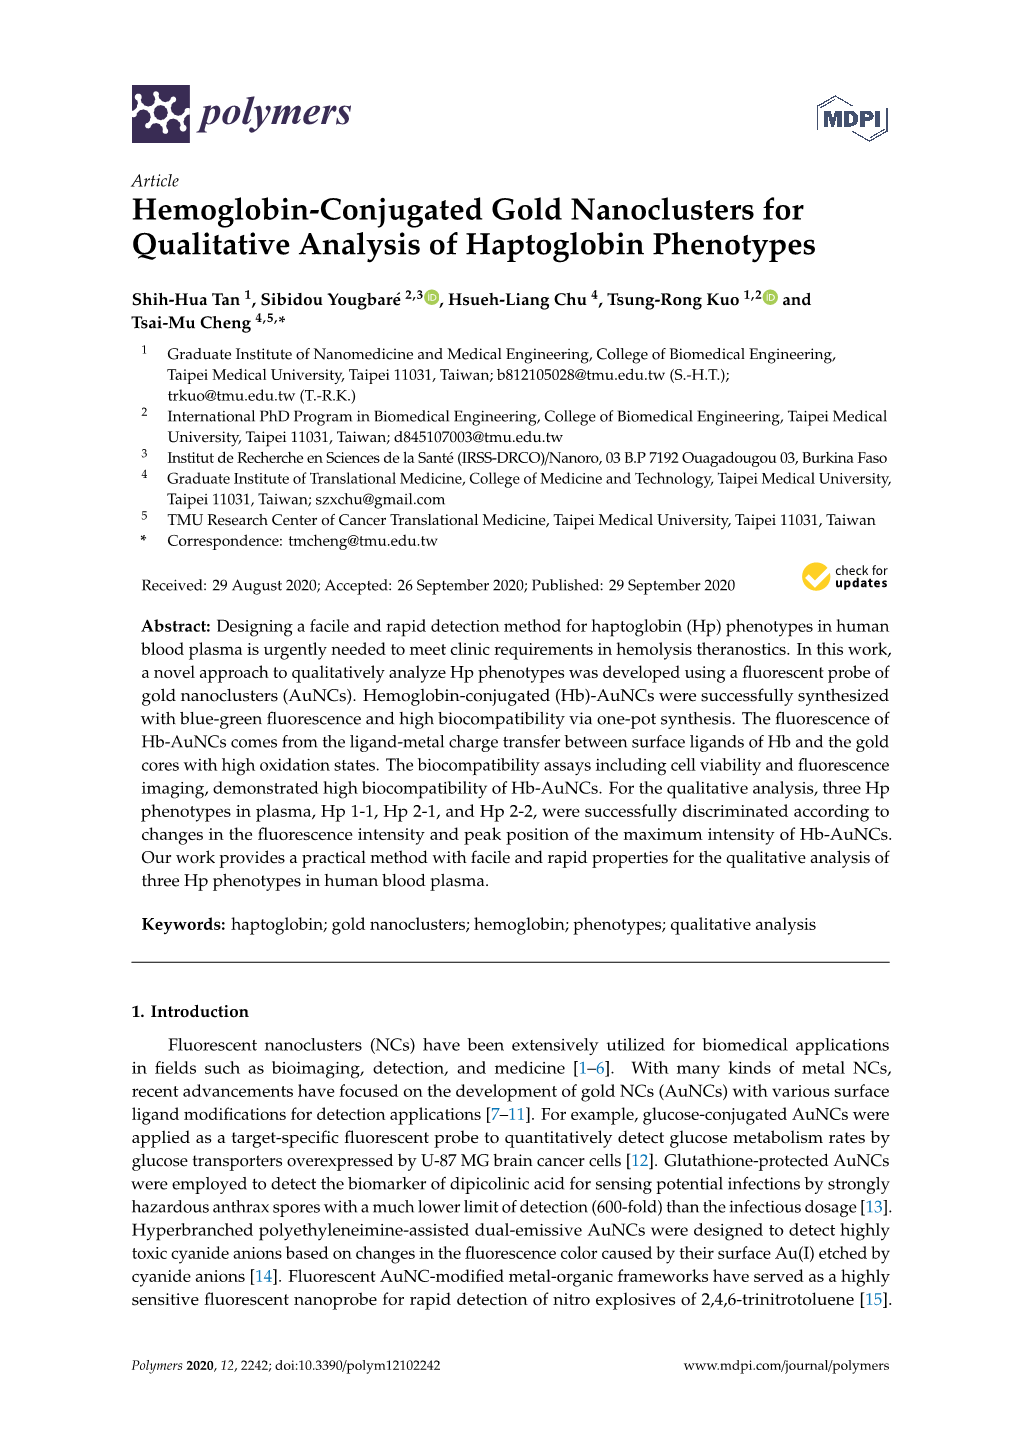 Hemoglobin-Conjugated Gold Nanoclusters for Qualitative Analysis of Haptoglobin Phenotypes